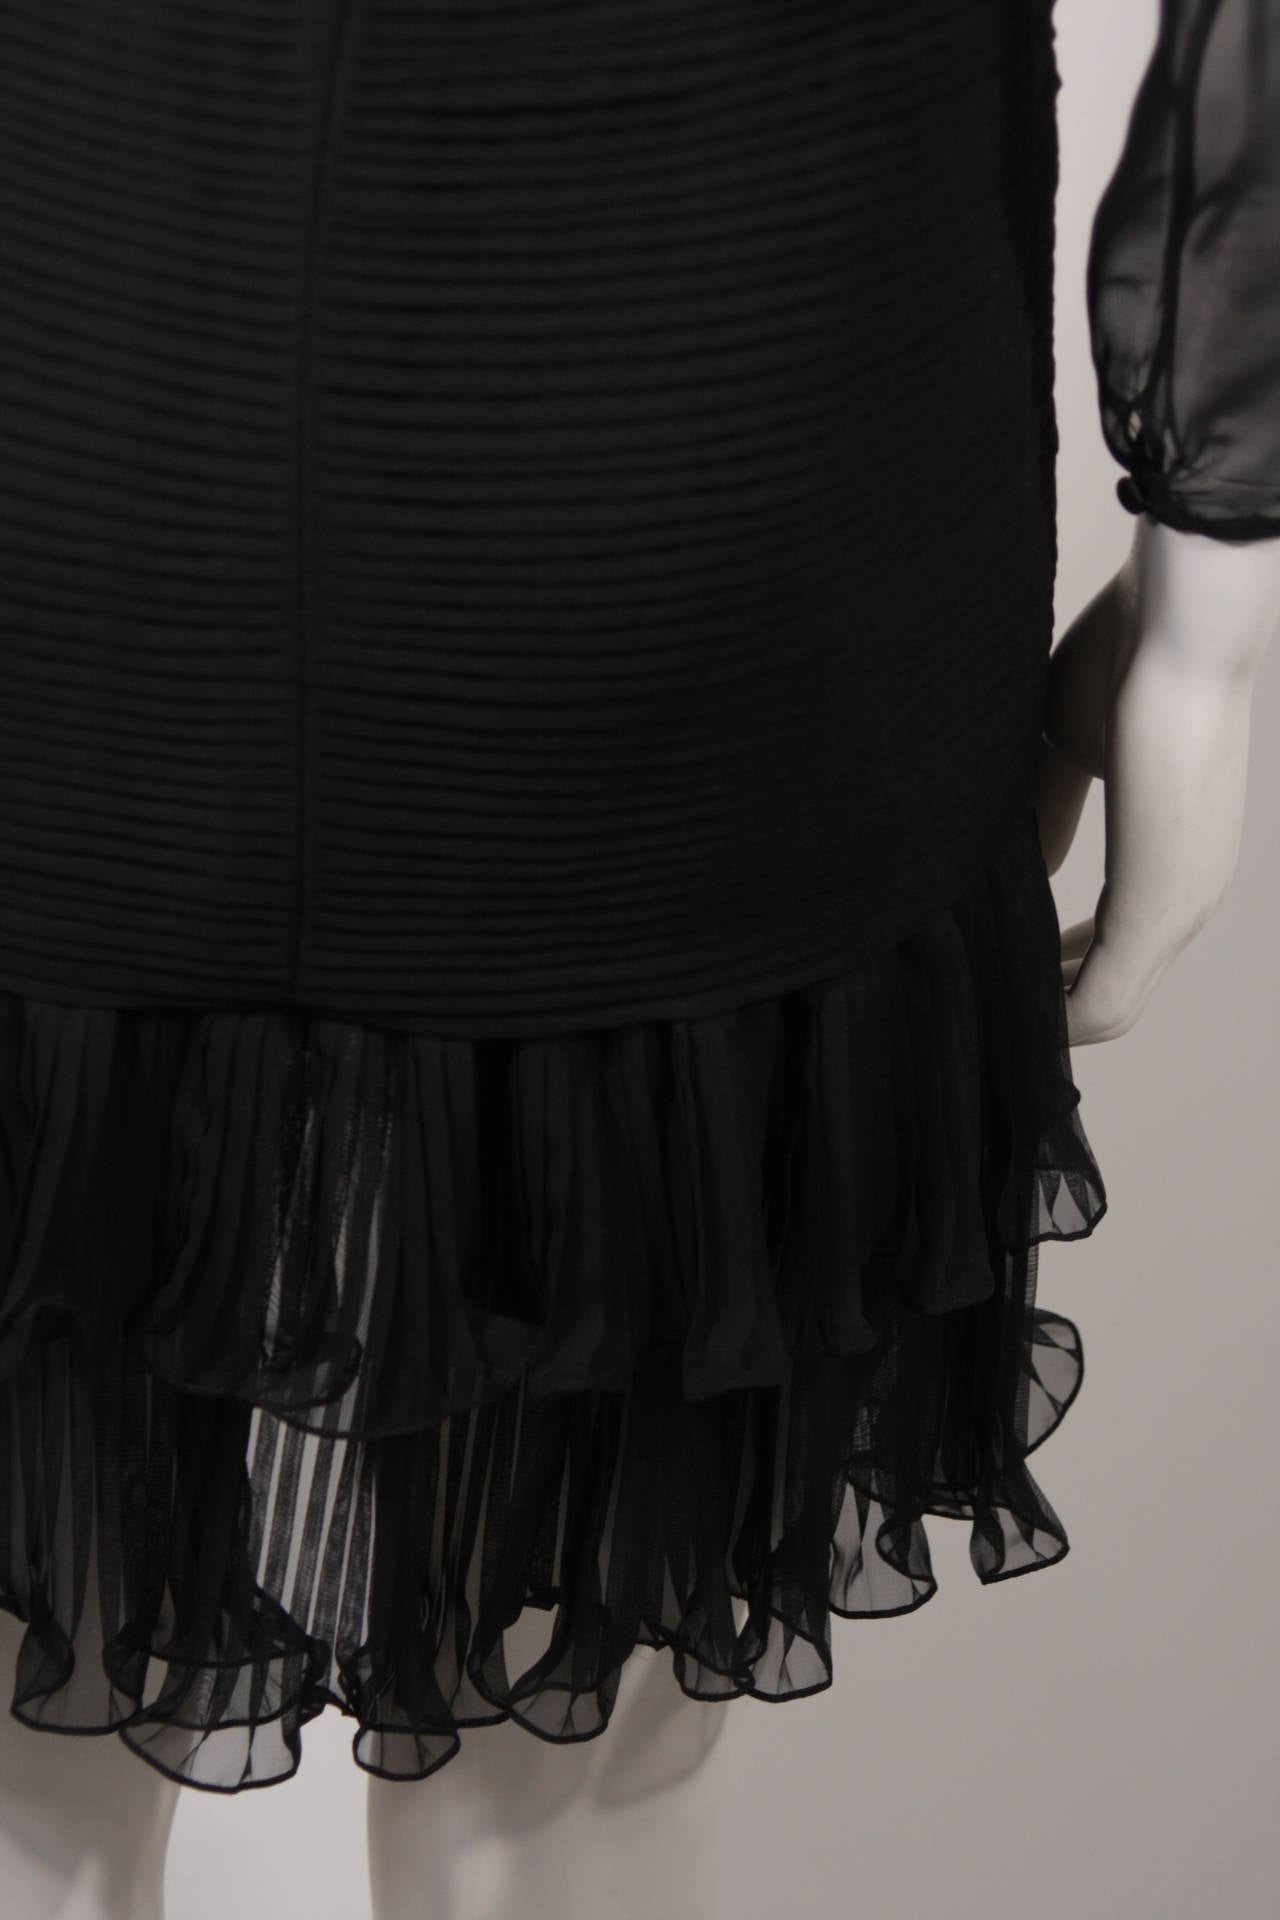 Oscar De La Renta Black Silk Chiffon Cocktail Dress Size 10 For Sale 1